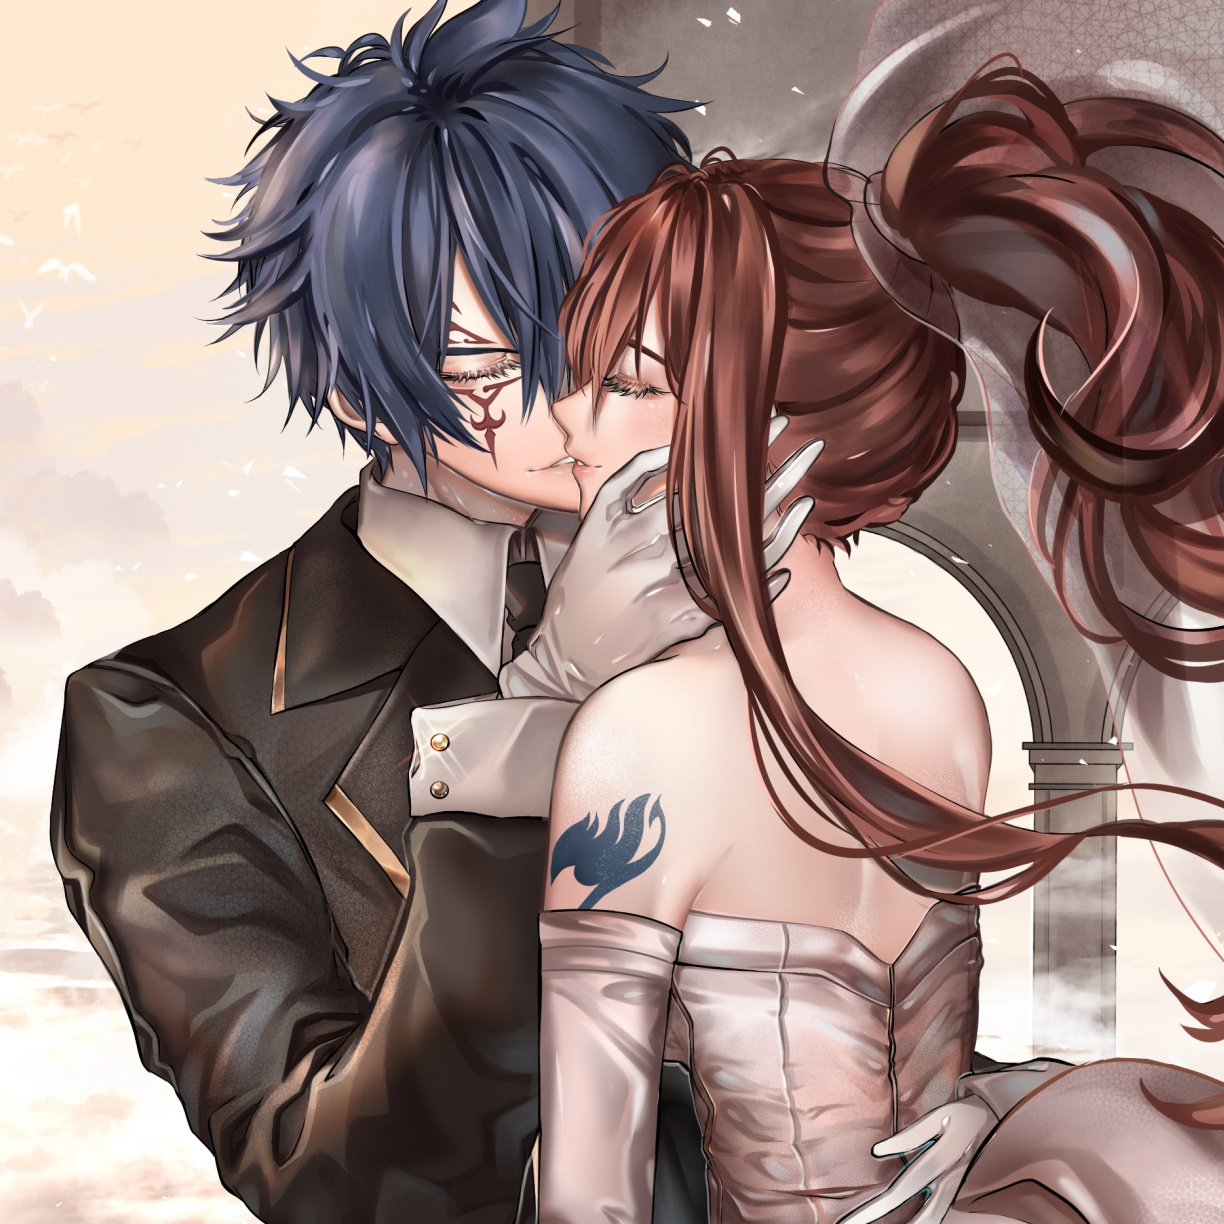 Love Anime Couples Kiss - 1224x1224 Wallpaper 